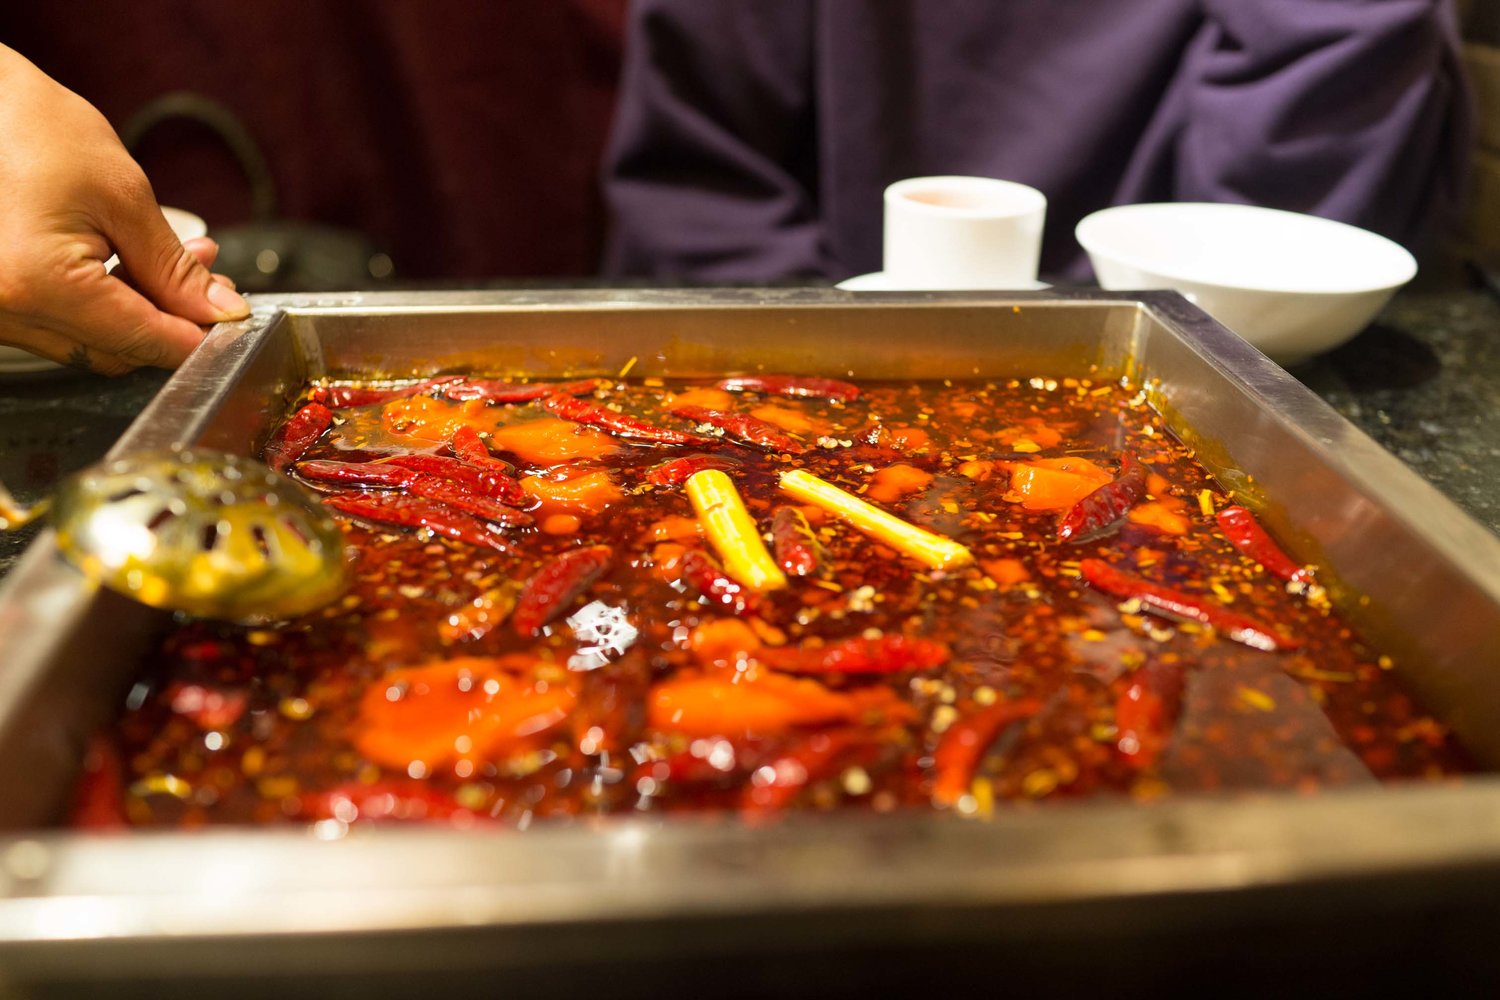 Sichuan Hot Pot, Recipe